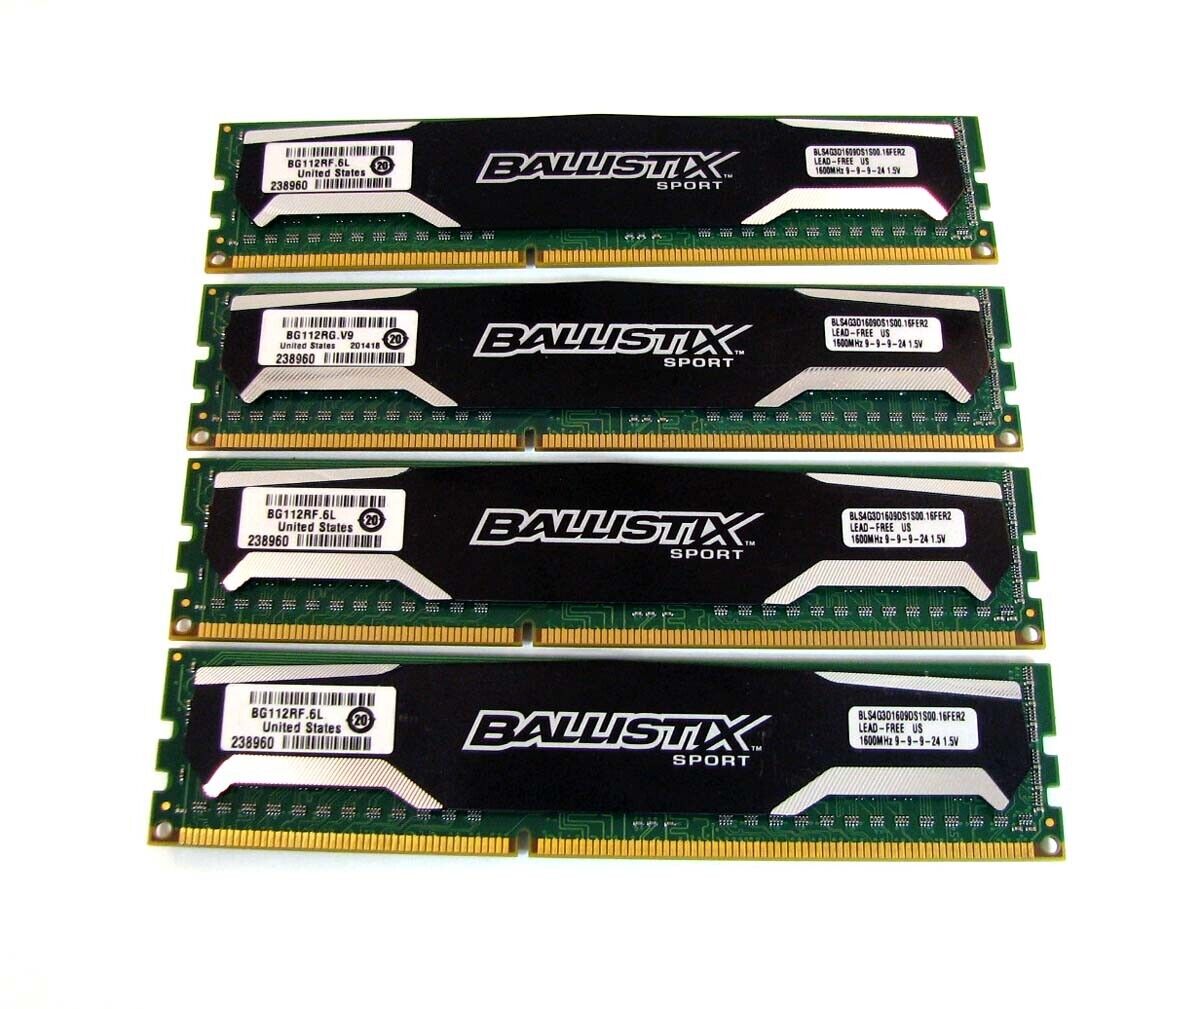 Crucial Ballistix 16GB 4x 4GB PC3-12800U Non-ECC DDR3 Memory BLS4G3D1609DS1S00